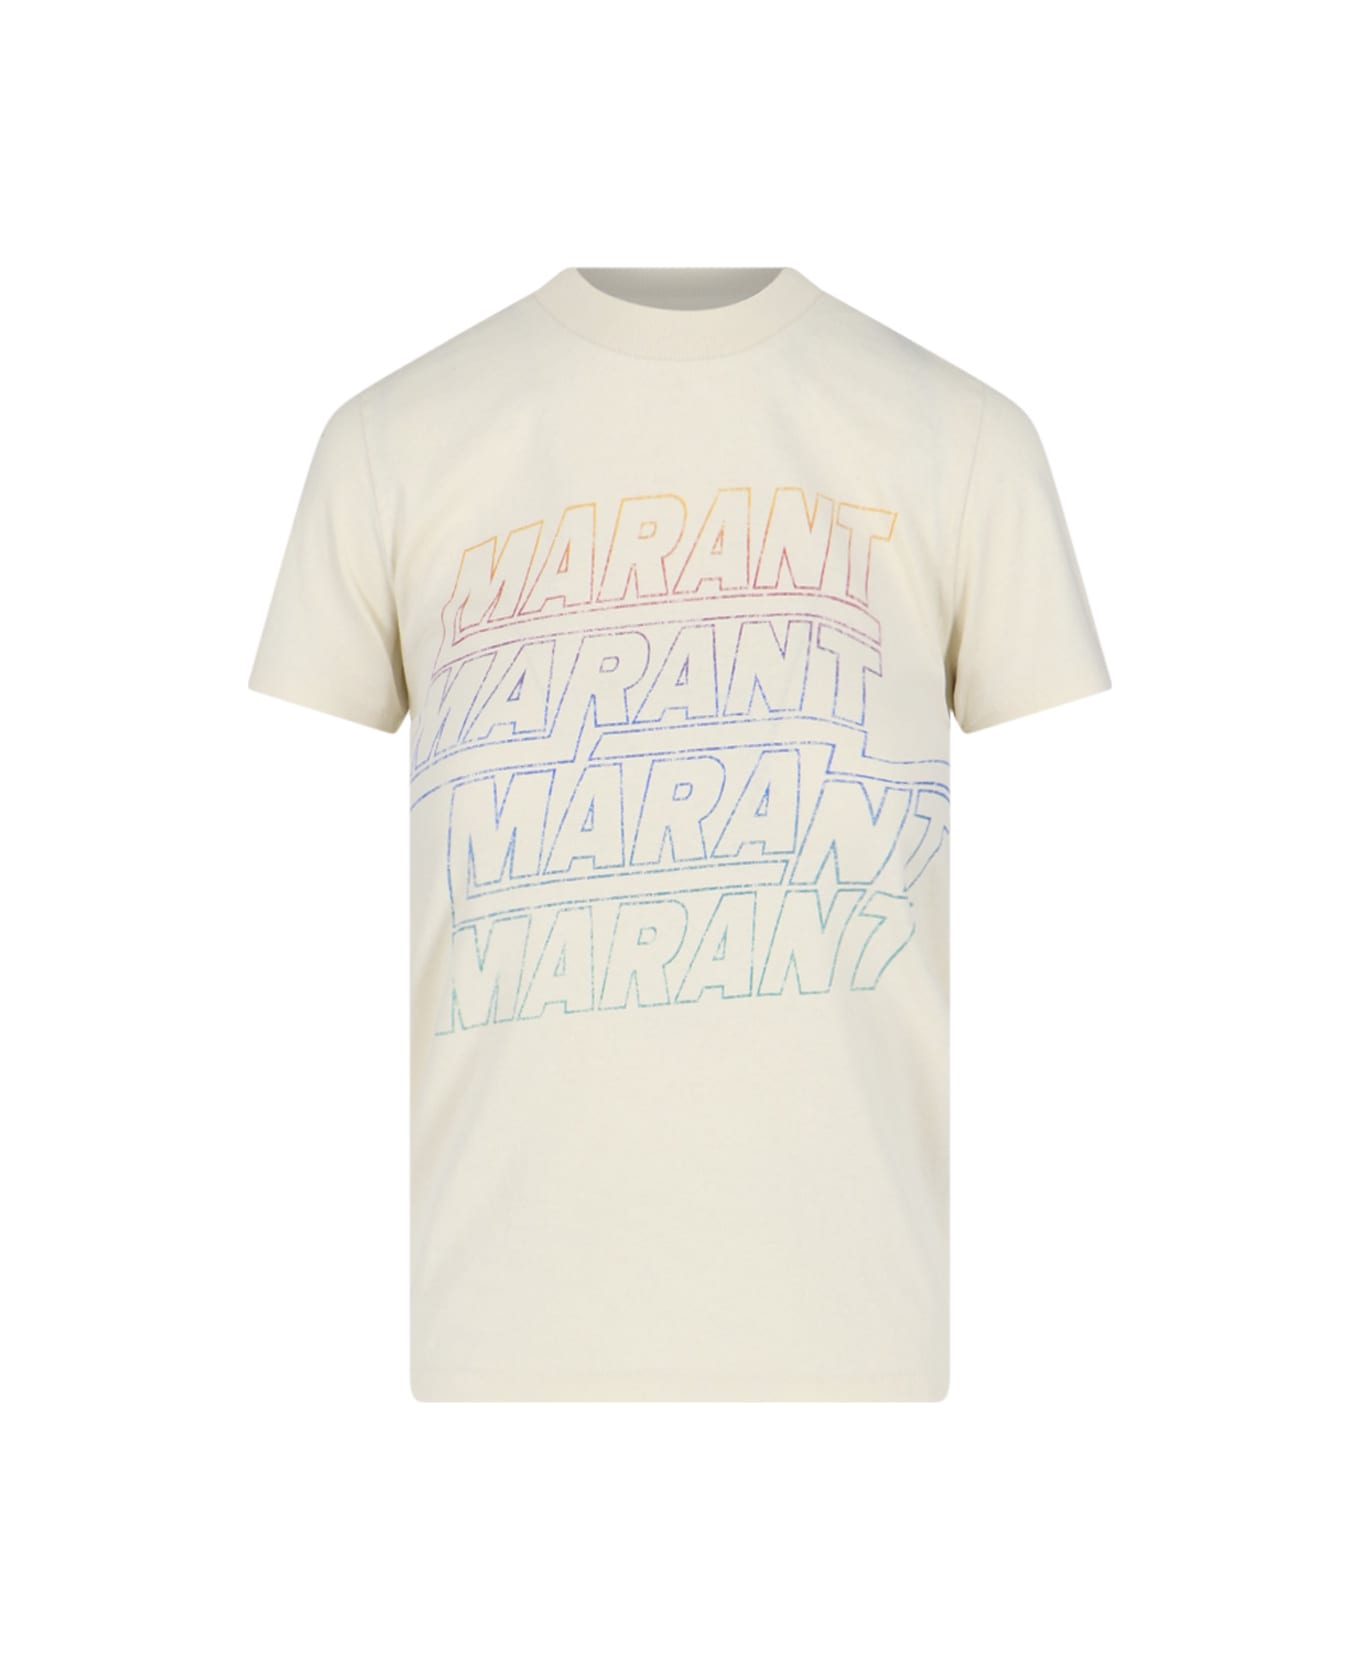 Marant Étoile Logo T-shirt - Crema